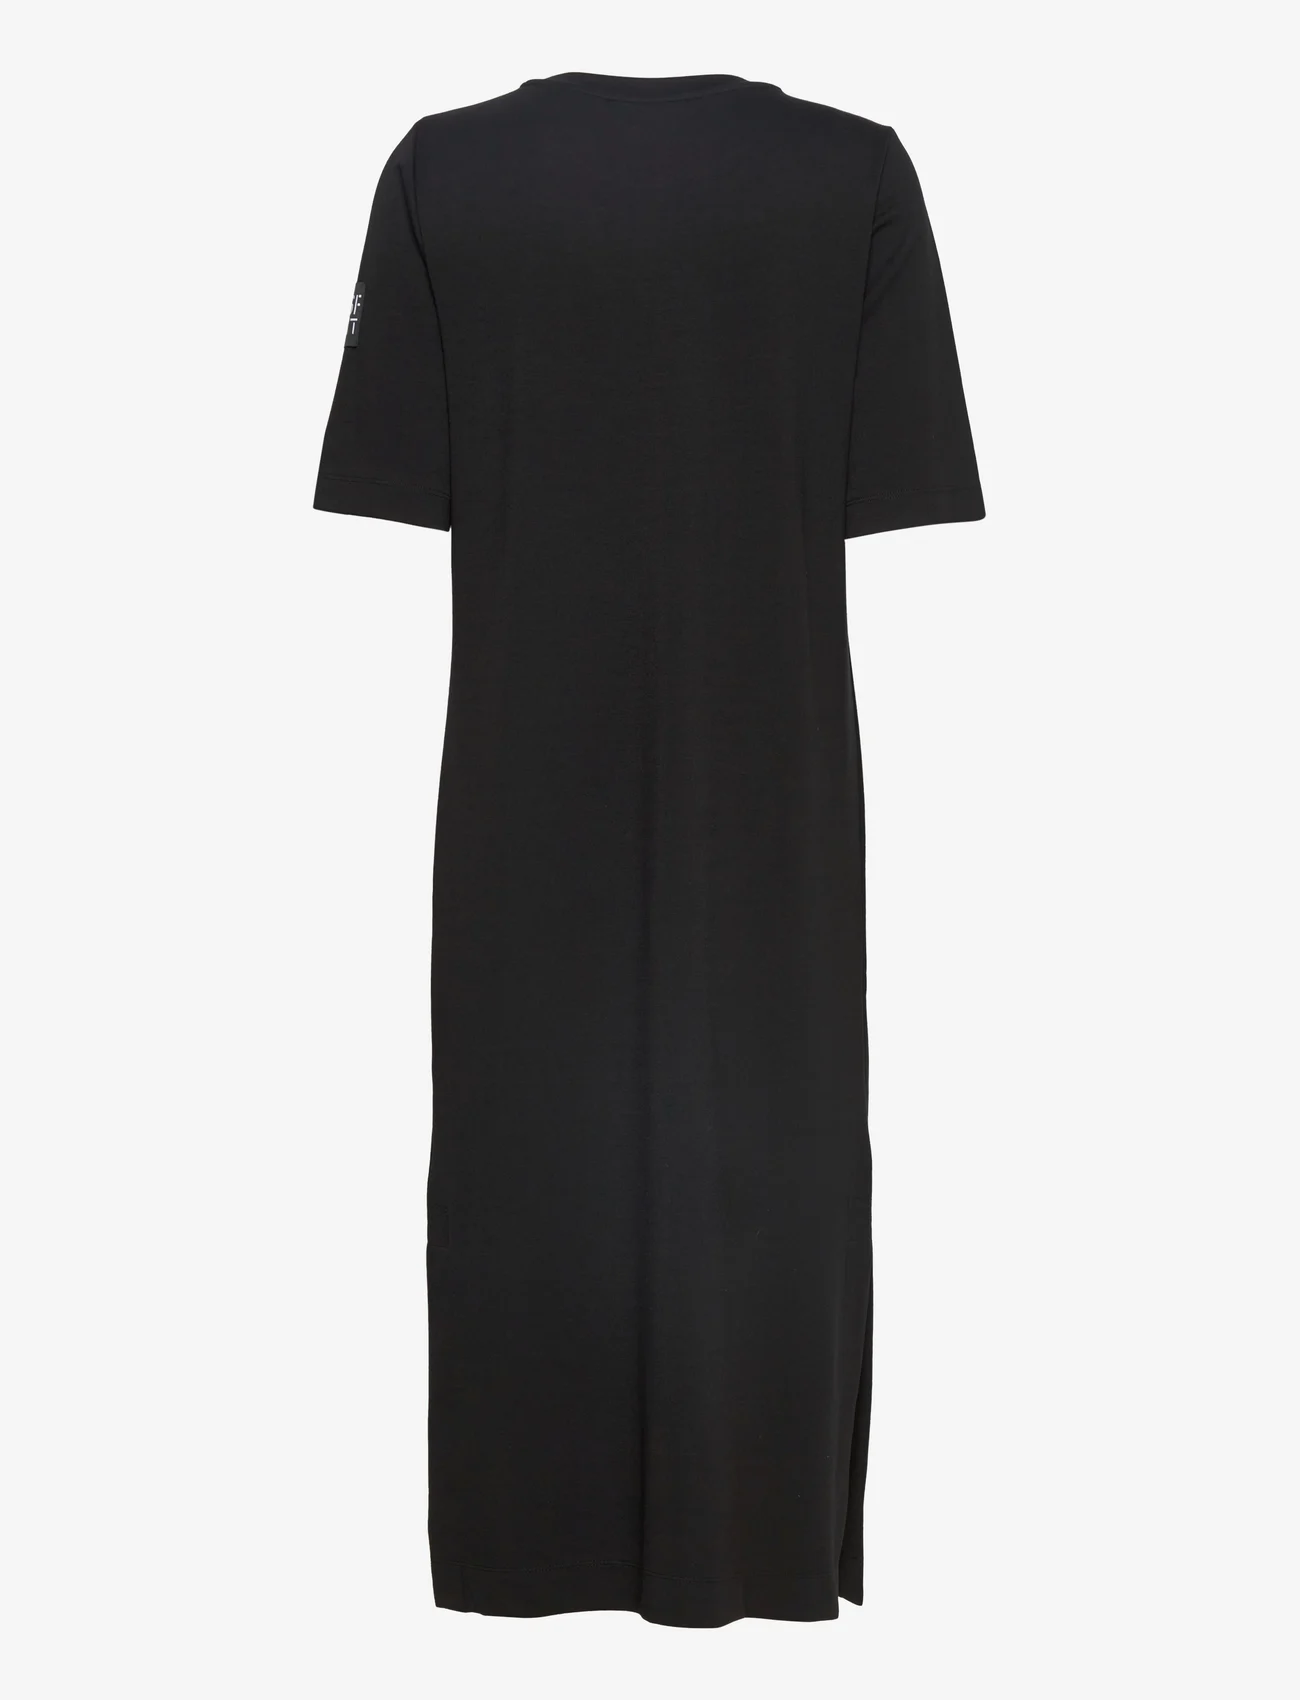 Esprit Collection - Midi-length T-shirt dress - t-shirt dresses - black - 1